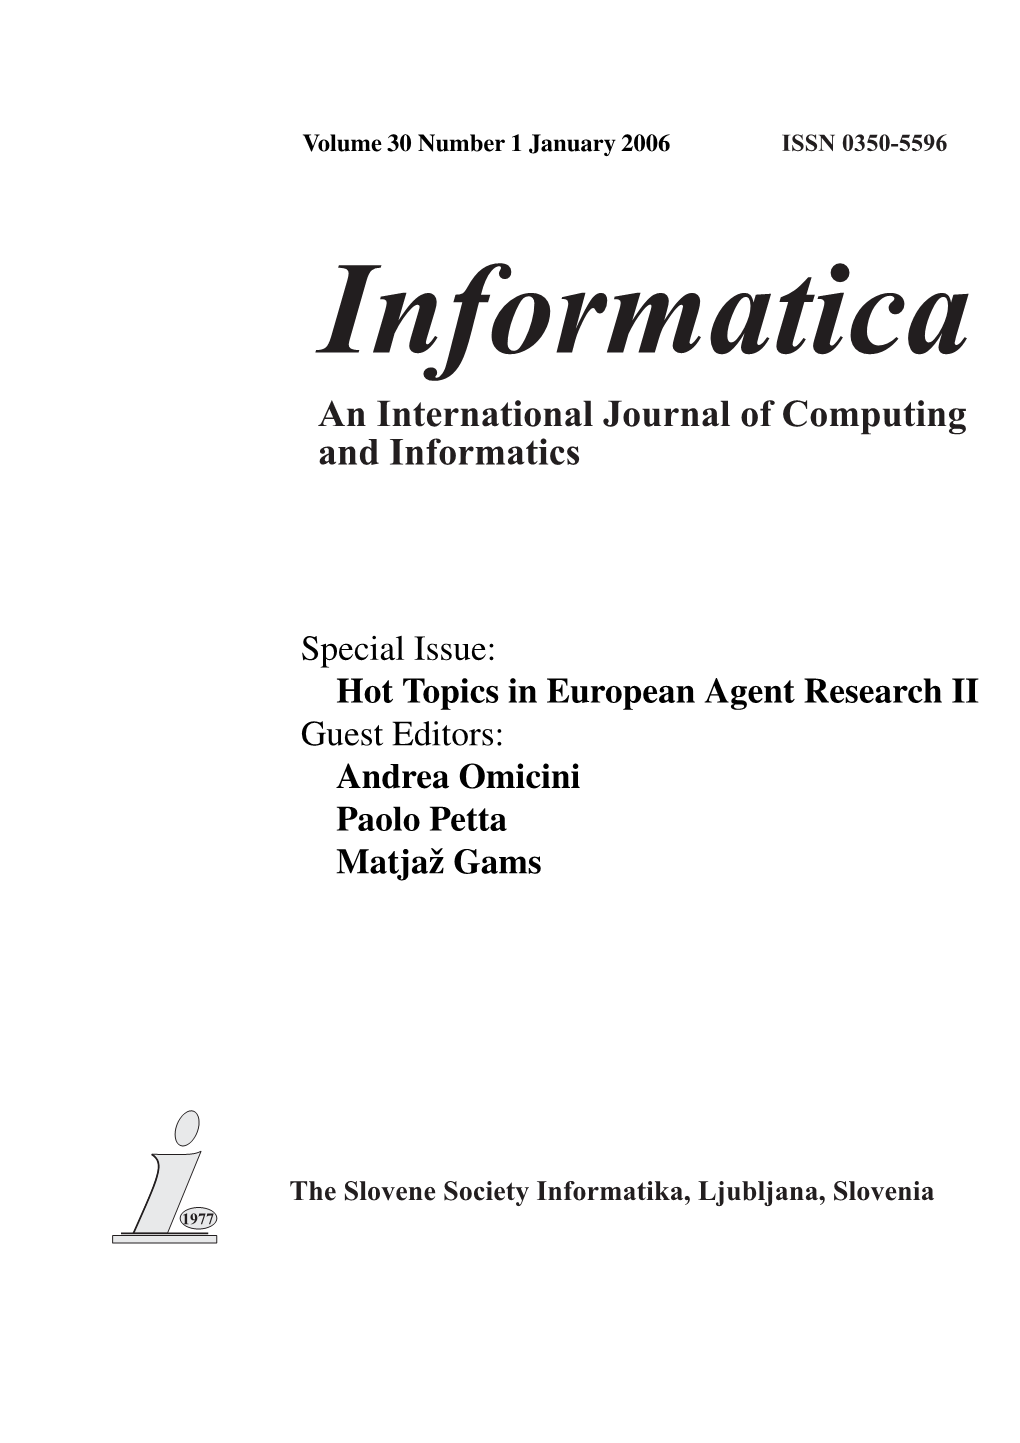 Special Issue: Hot Topics in European Agent Research II Guest Editors: Andrea Omicini Paolo Petta Matjaž Gams EDITORIAL BOARDS, PUBLISHING COUNCIL